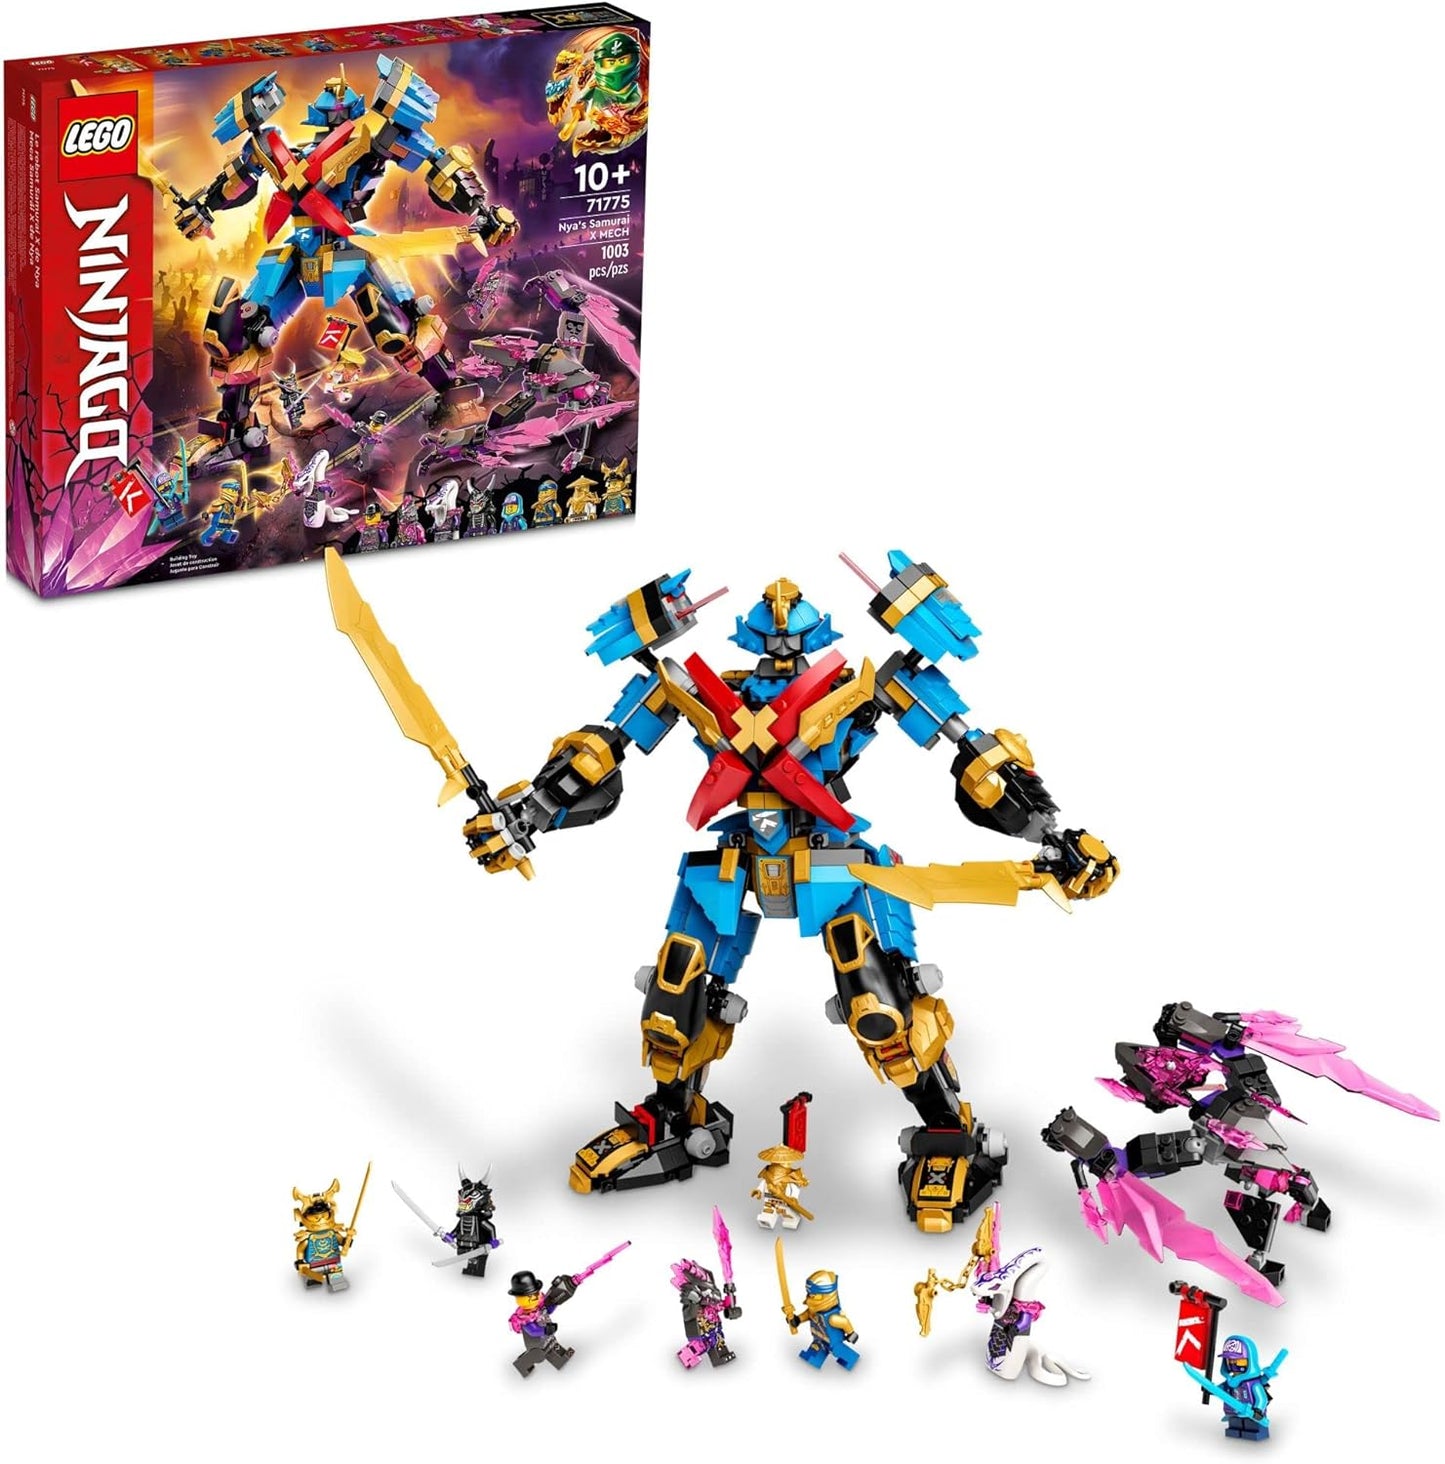 LEGO NINJAGO Nya's Samurai X MECH Action Figure, 71775 Robot Ninja Toy with Golden Jay Plus 7 Minifigures